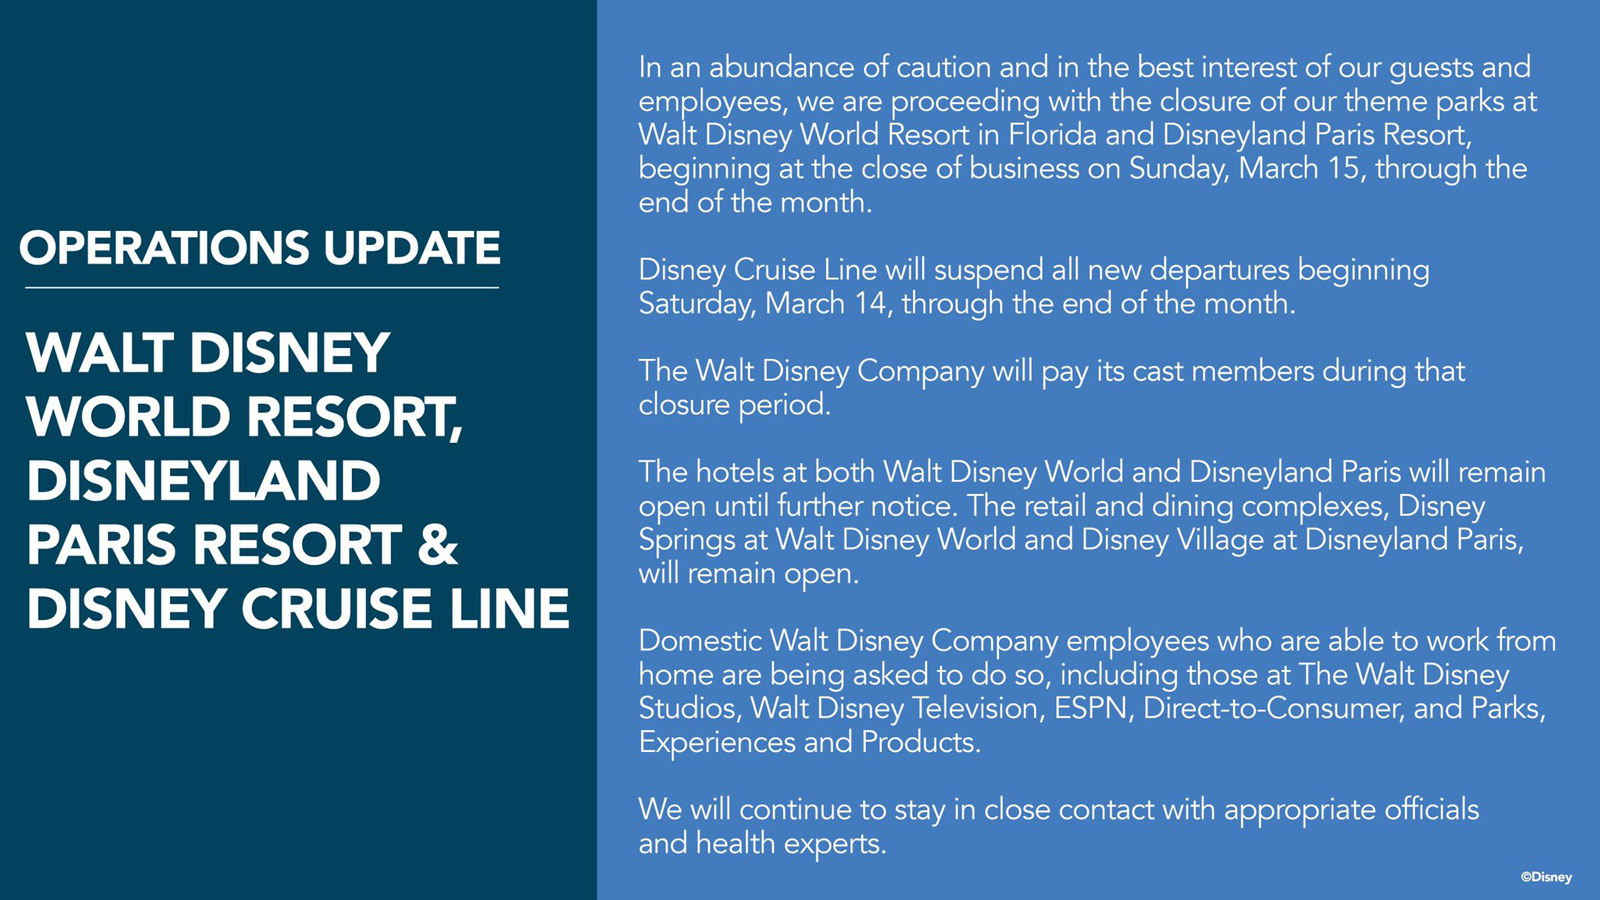 Disney Cruise Line & Parks & Resorts Suspect Operations Due to Coronavirus